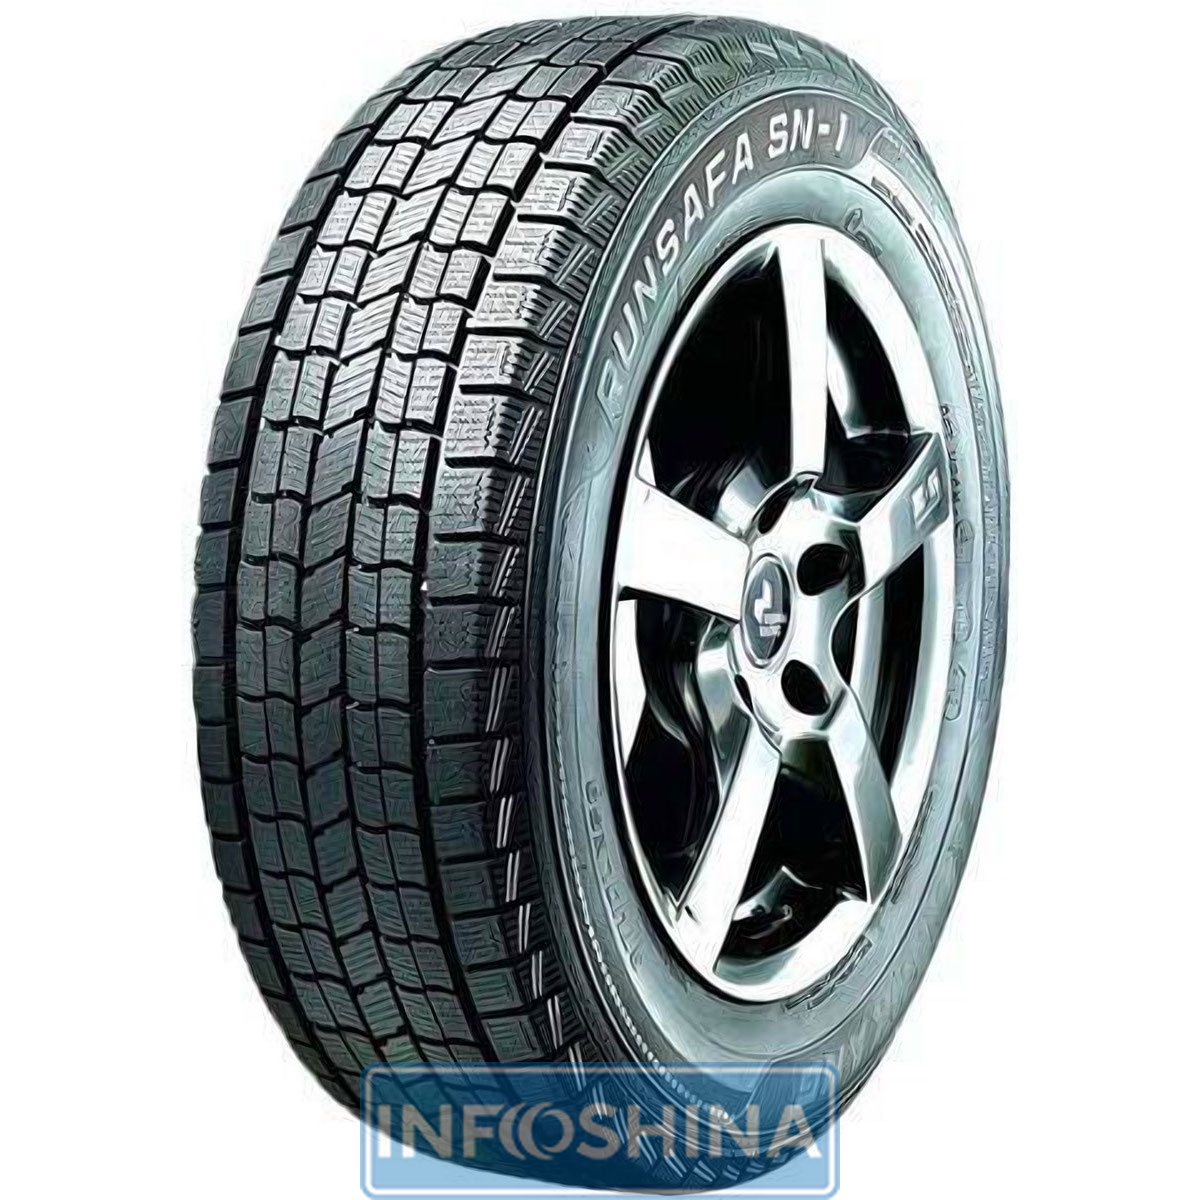 Купить шины Nankang Runsafa SN-1 235/55 R18 100Q